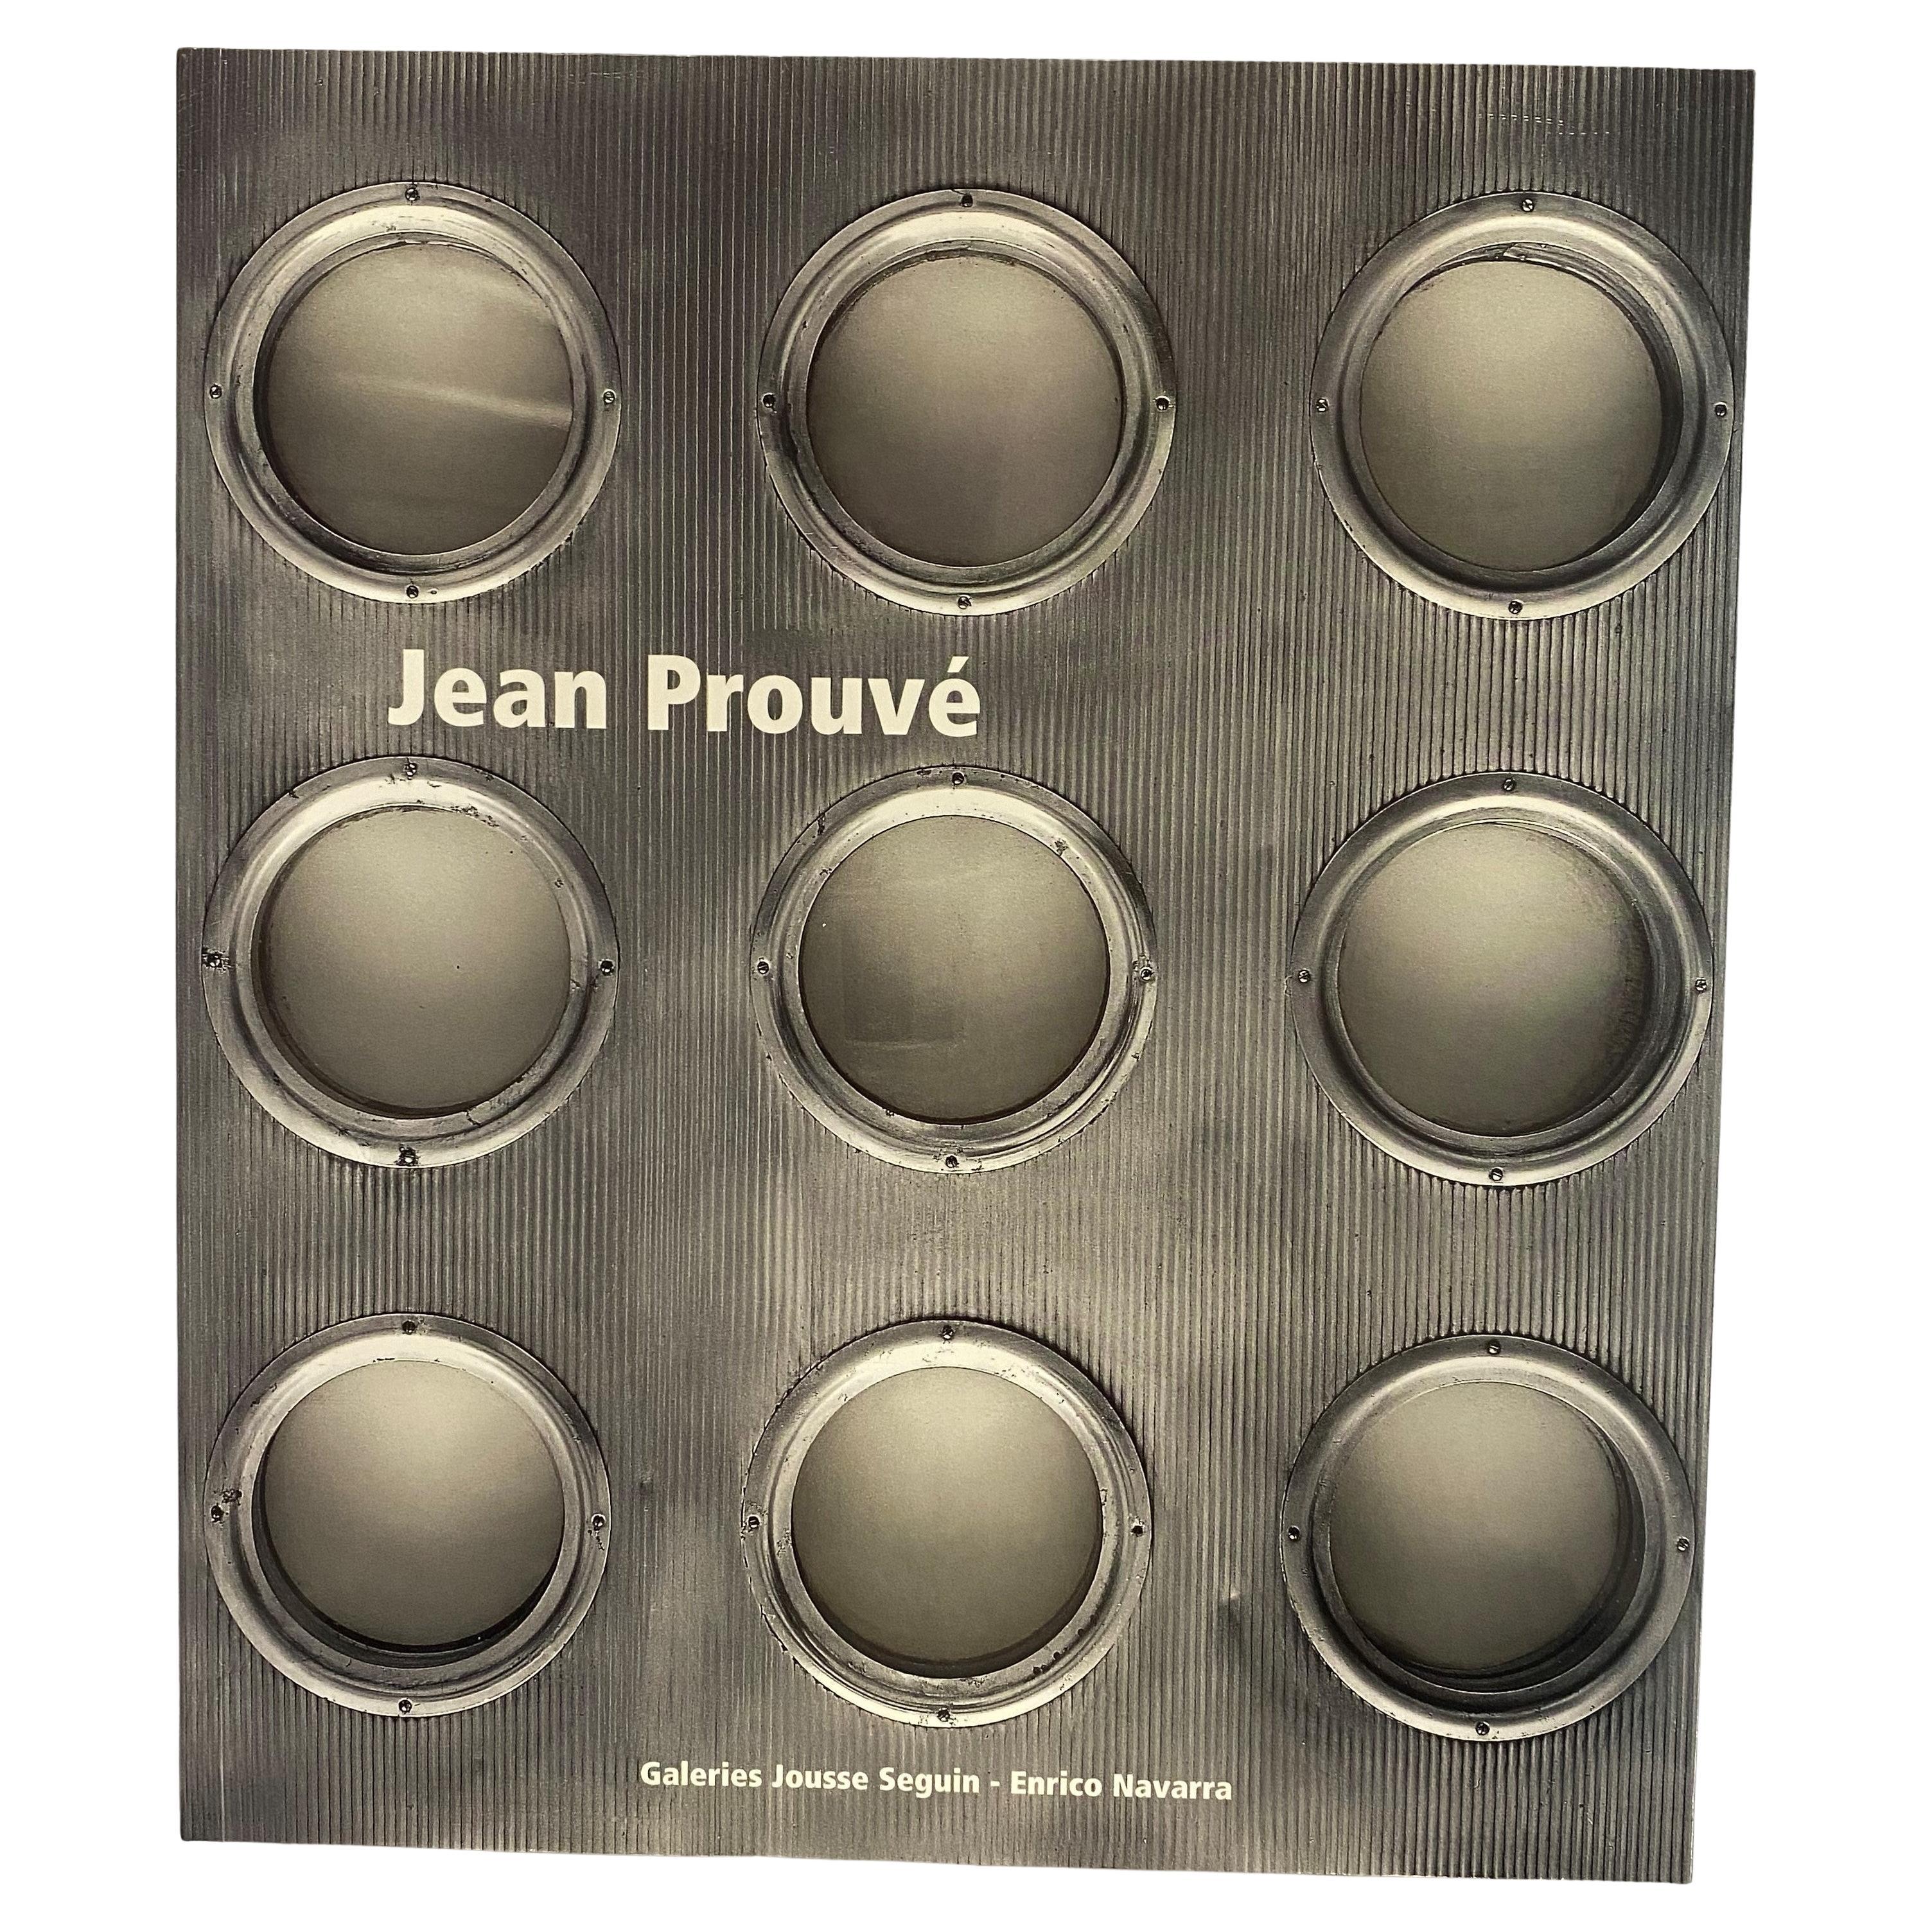 Jean Prouve by Enrico Navarra (Book)